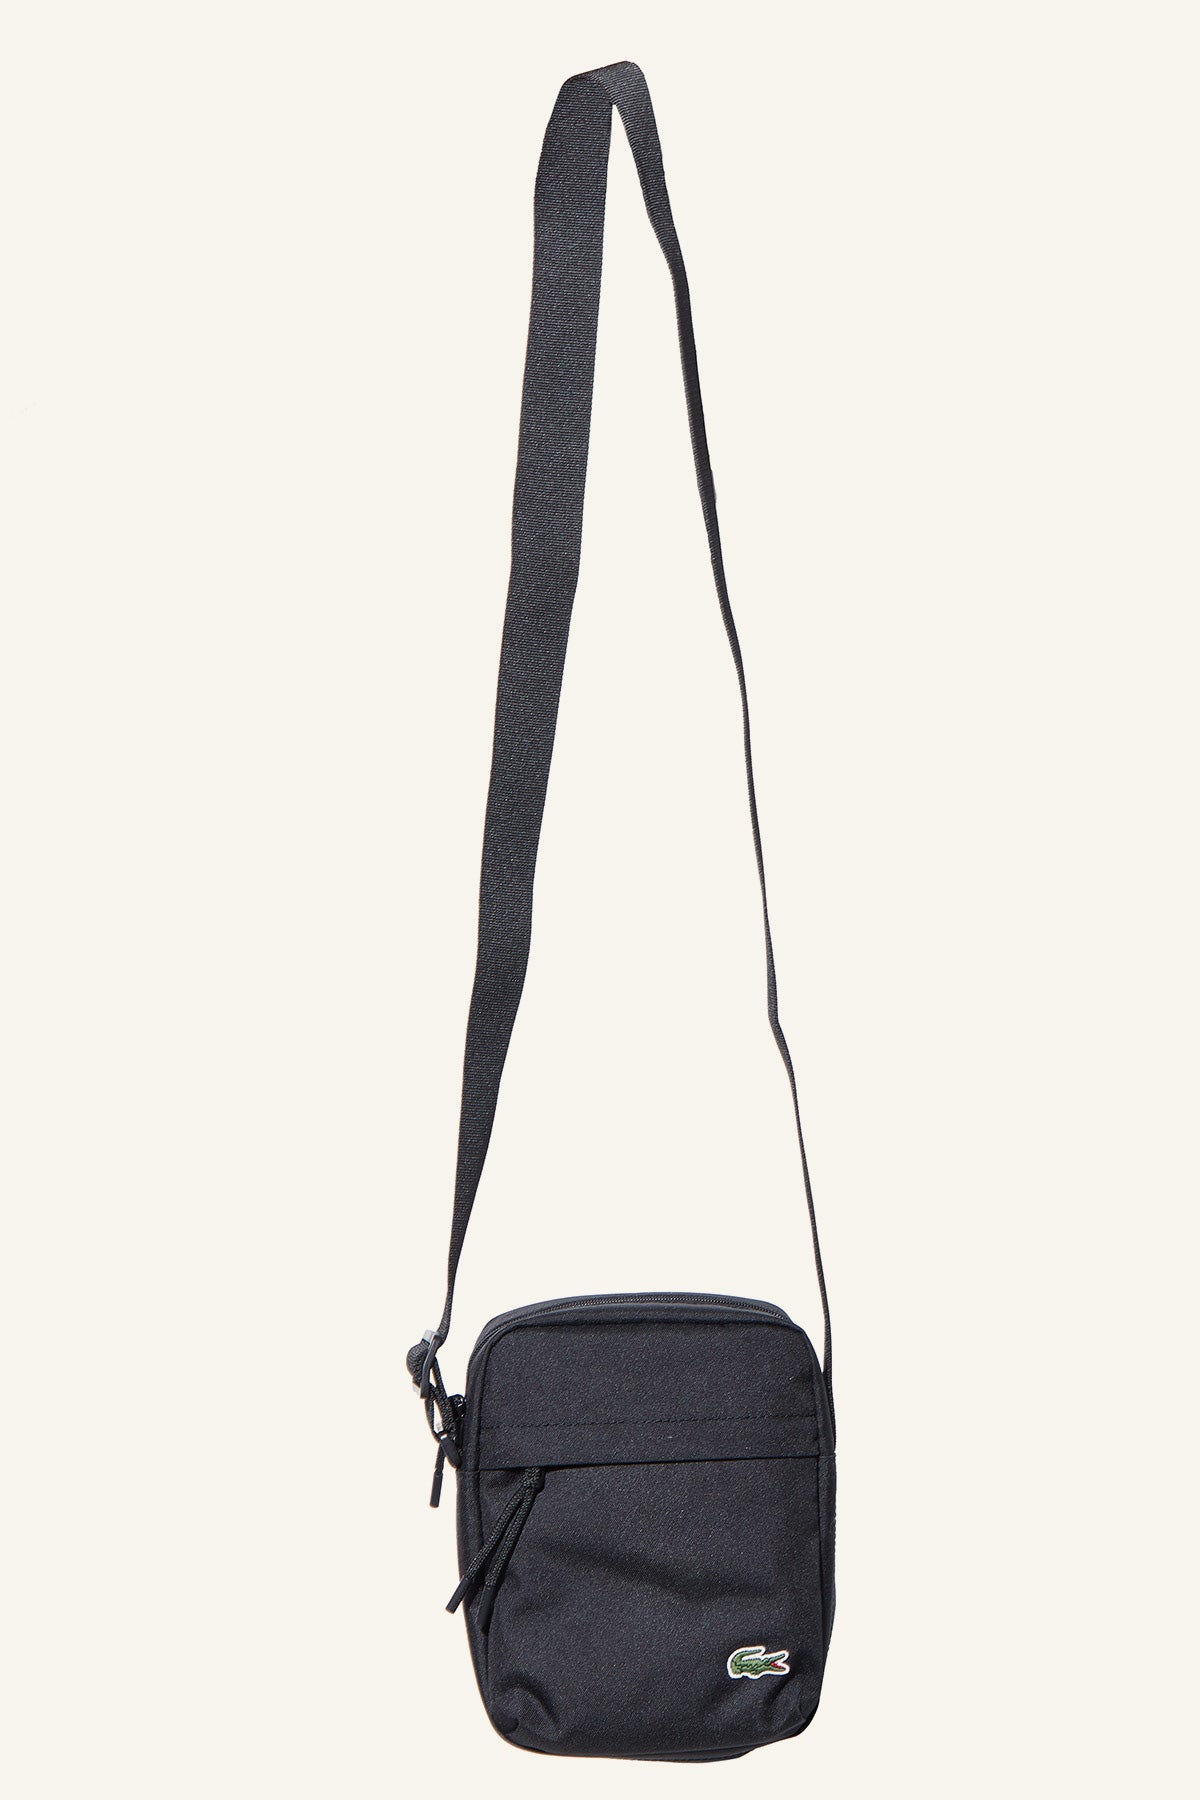 Lacoste Neocroc Vert Camera Bag Black